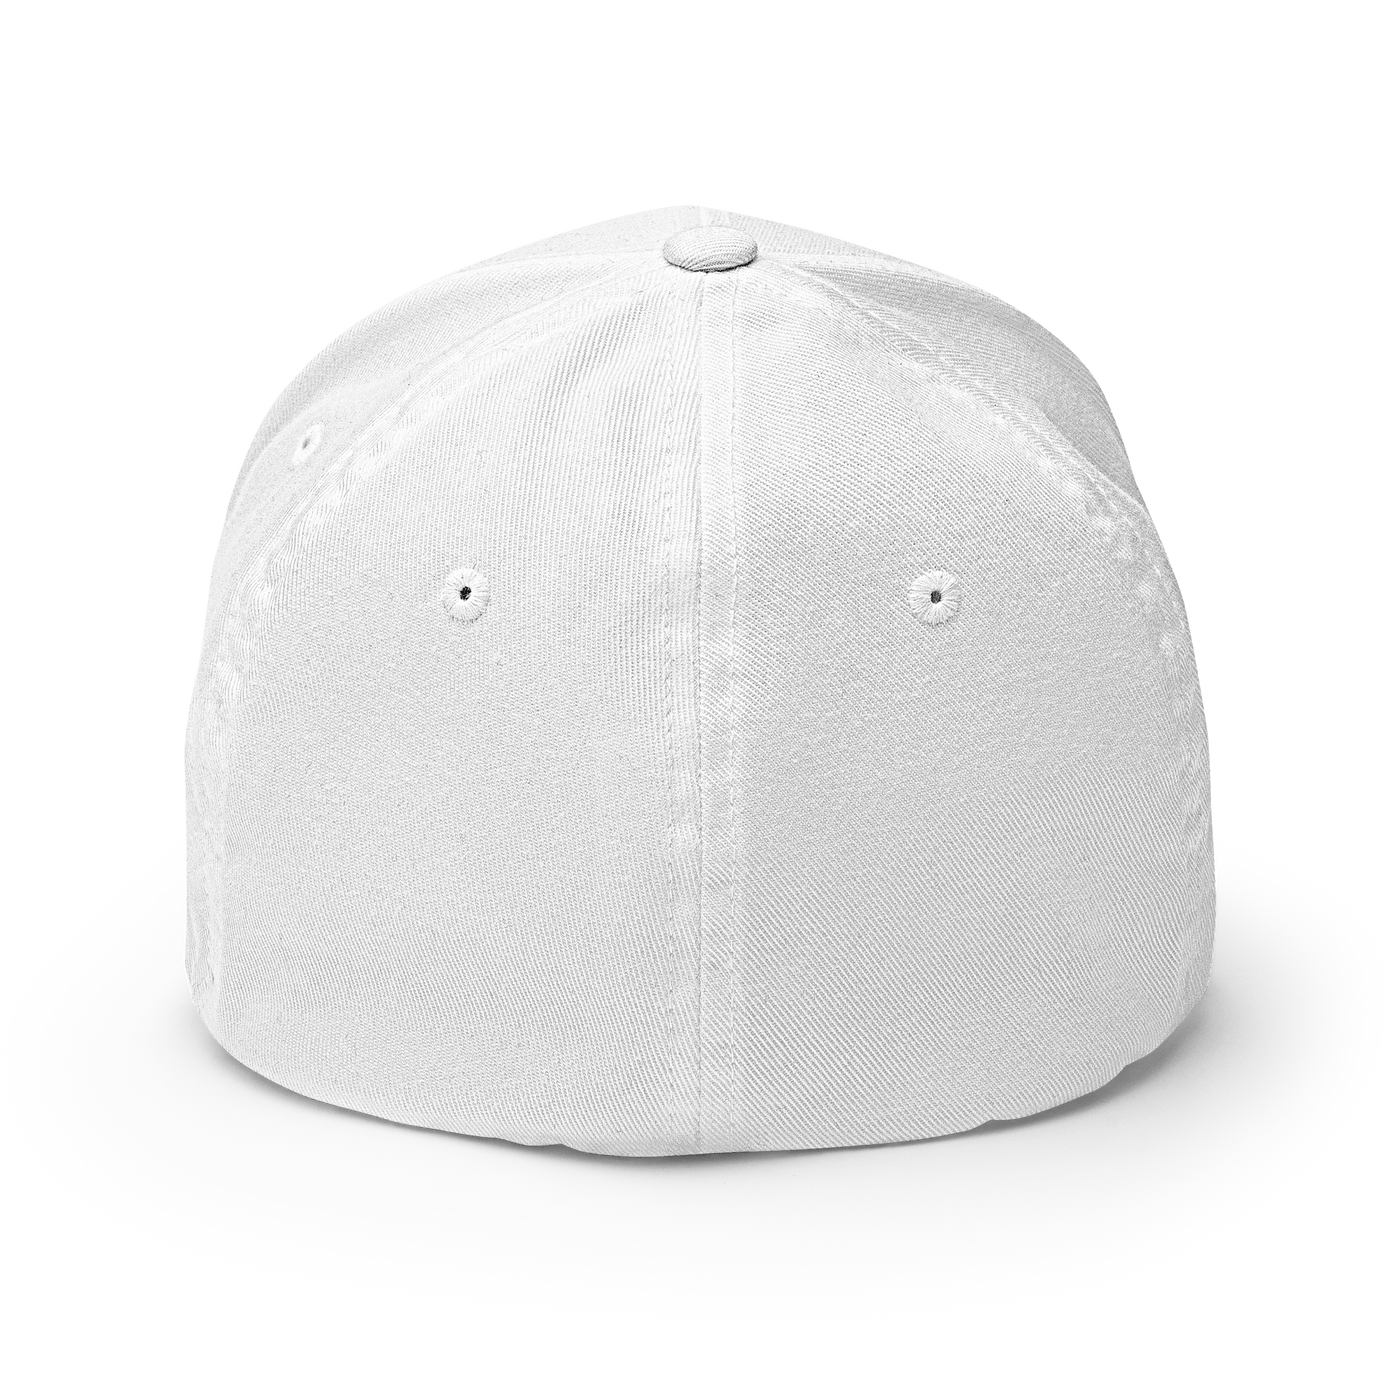 Future Milf Flexfit Cap - White - S/M - Just Another Cap Store